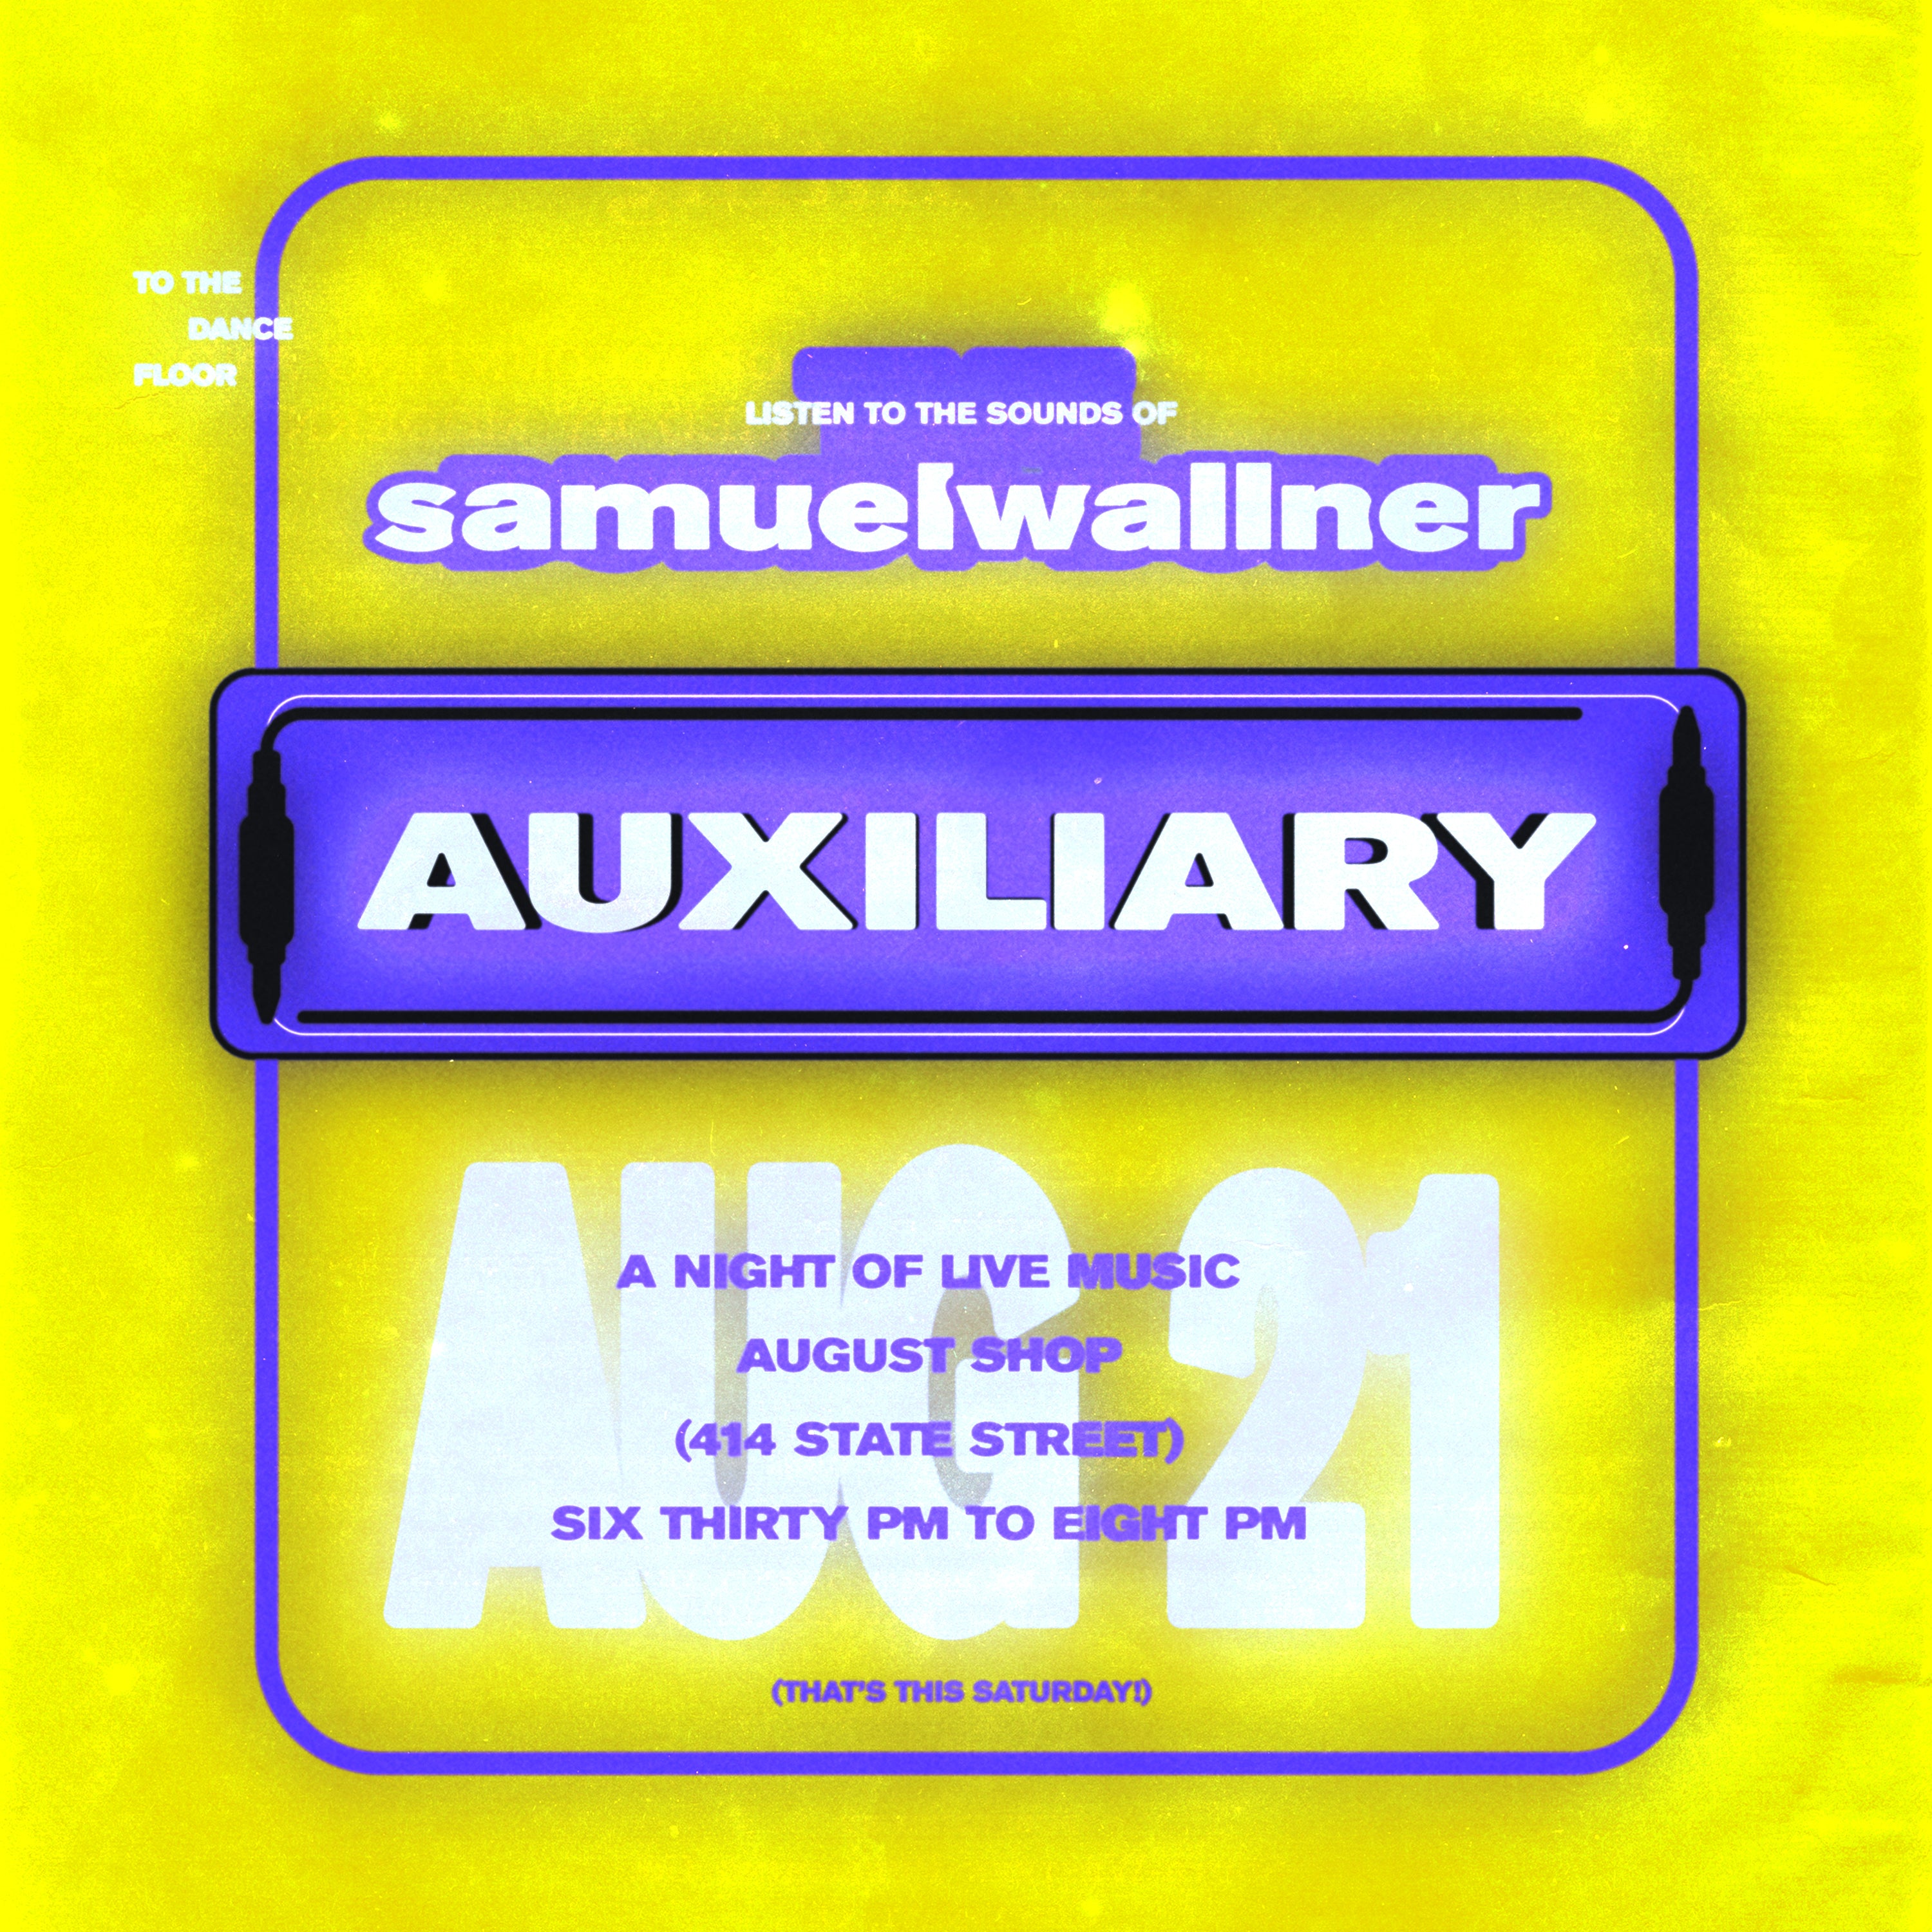 AUGUST AUX :: AUXILIARY 003 SAMUEL WALLNER